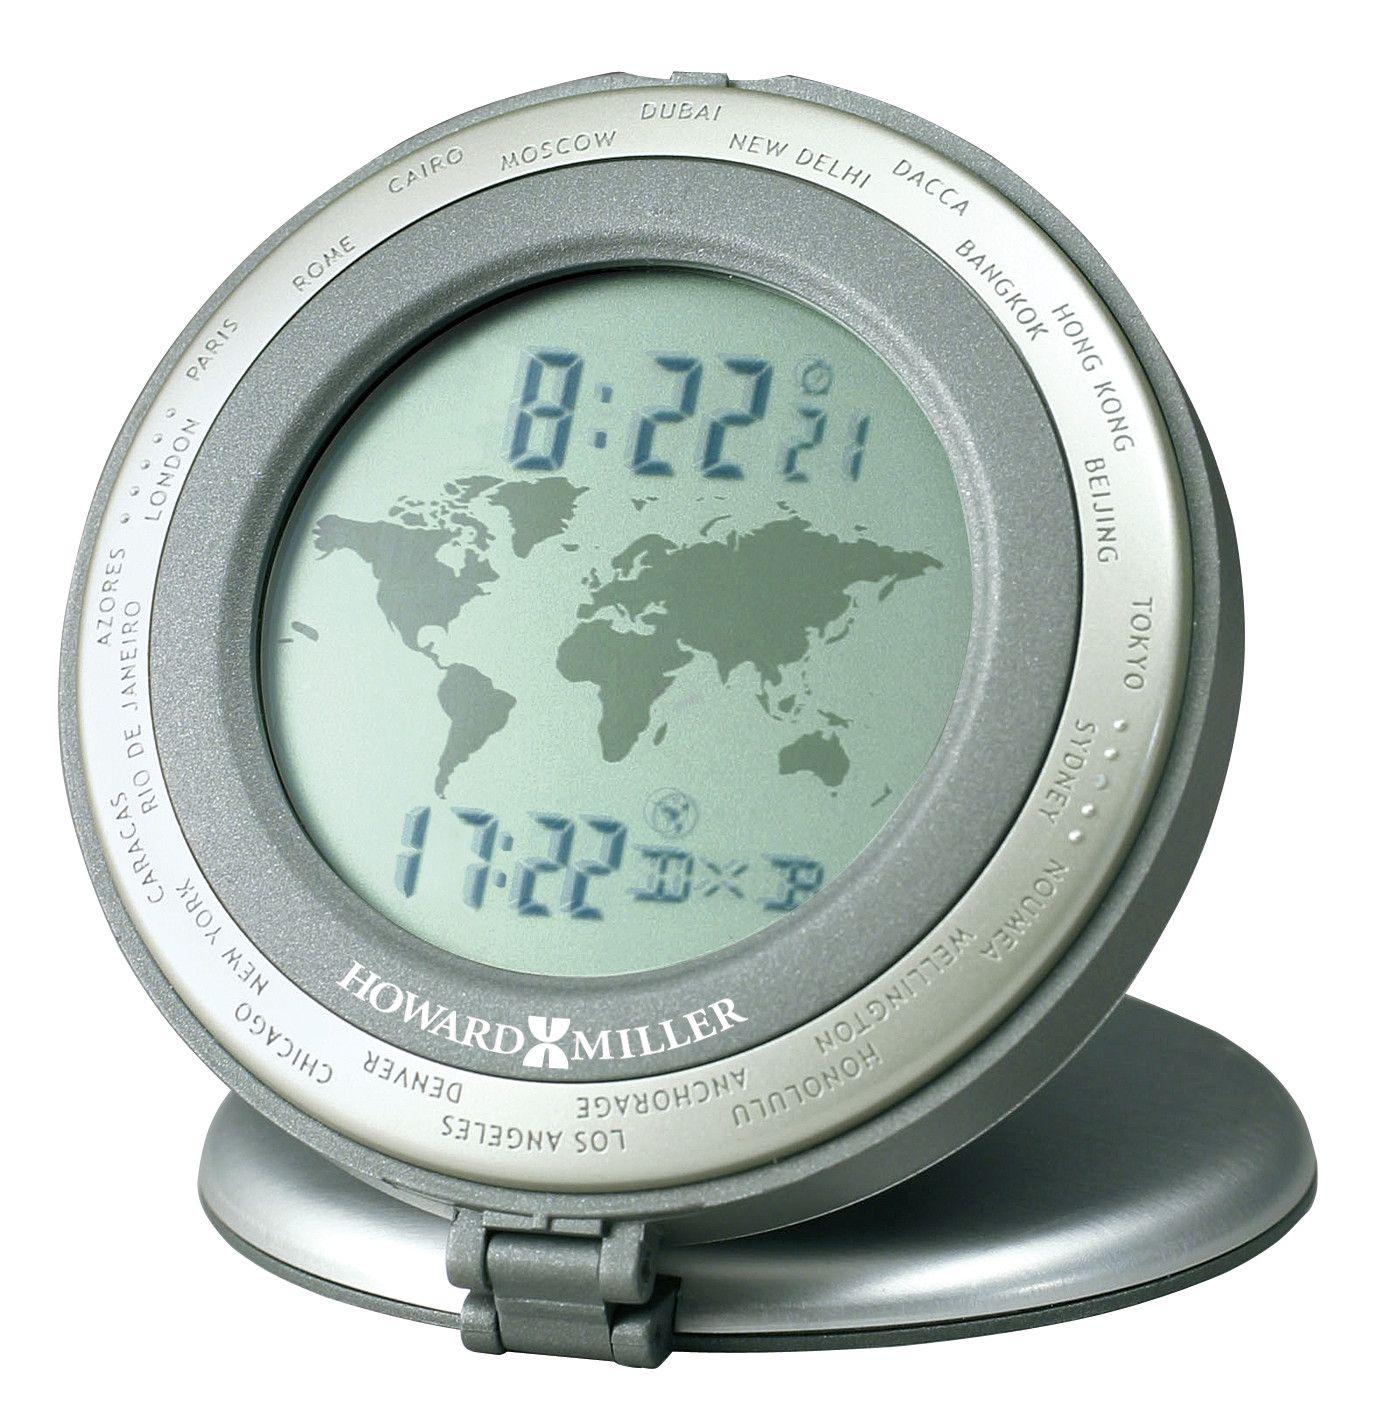 Howard Miller 645-600 World Travel Alarm (Уолд Травел Аларм) - фото 1